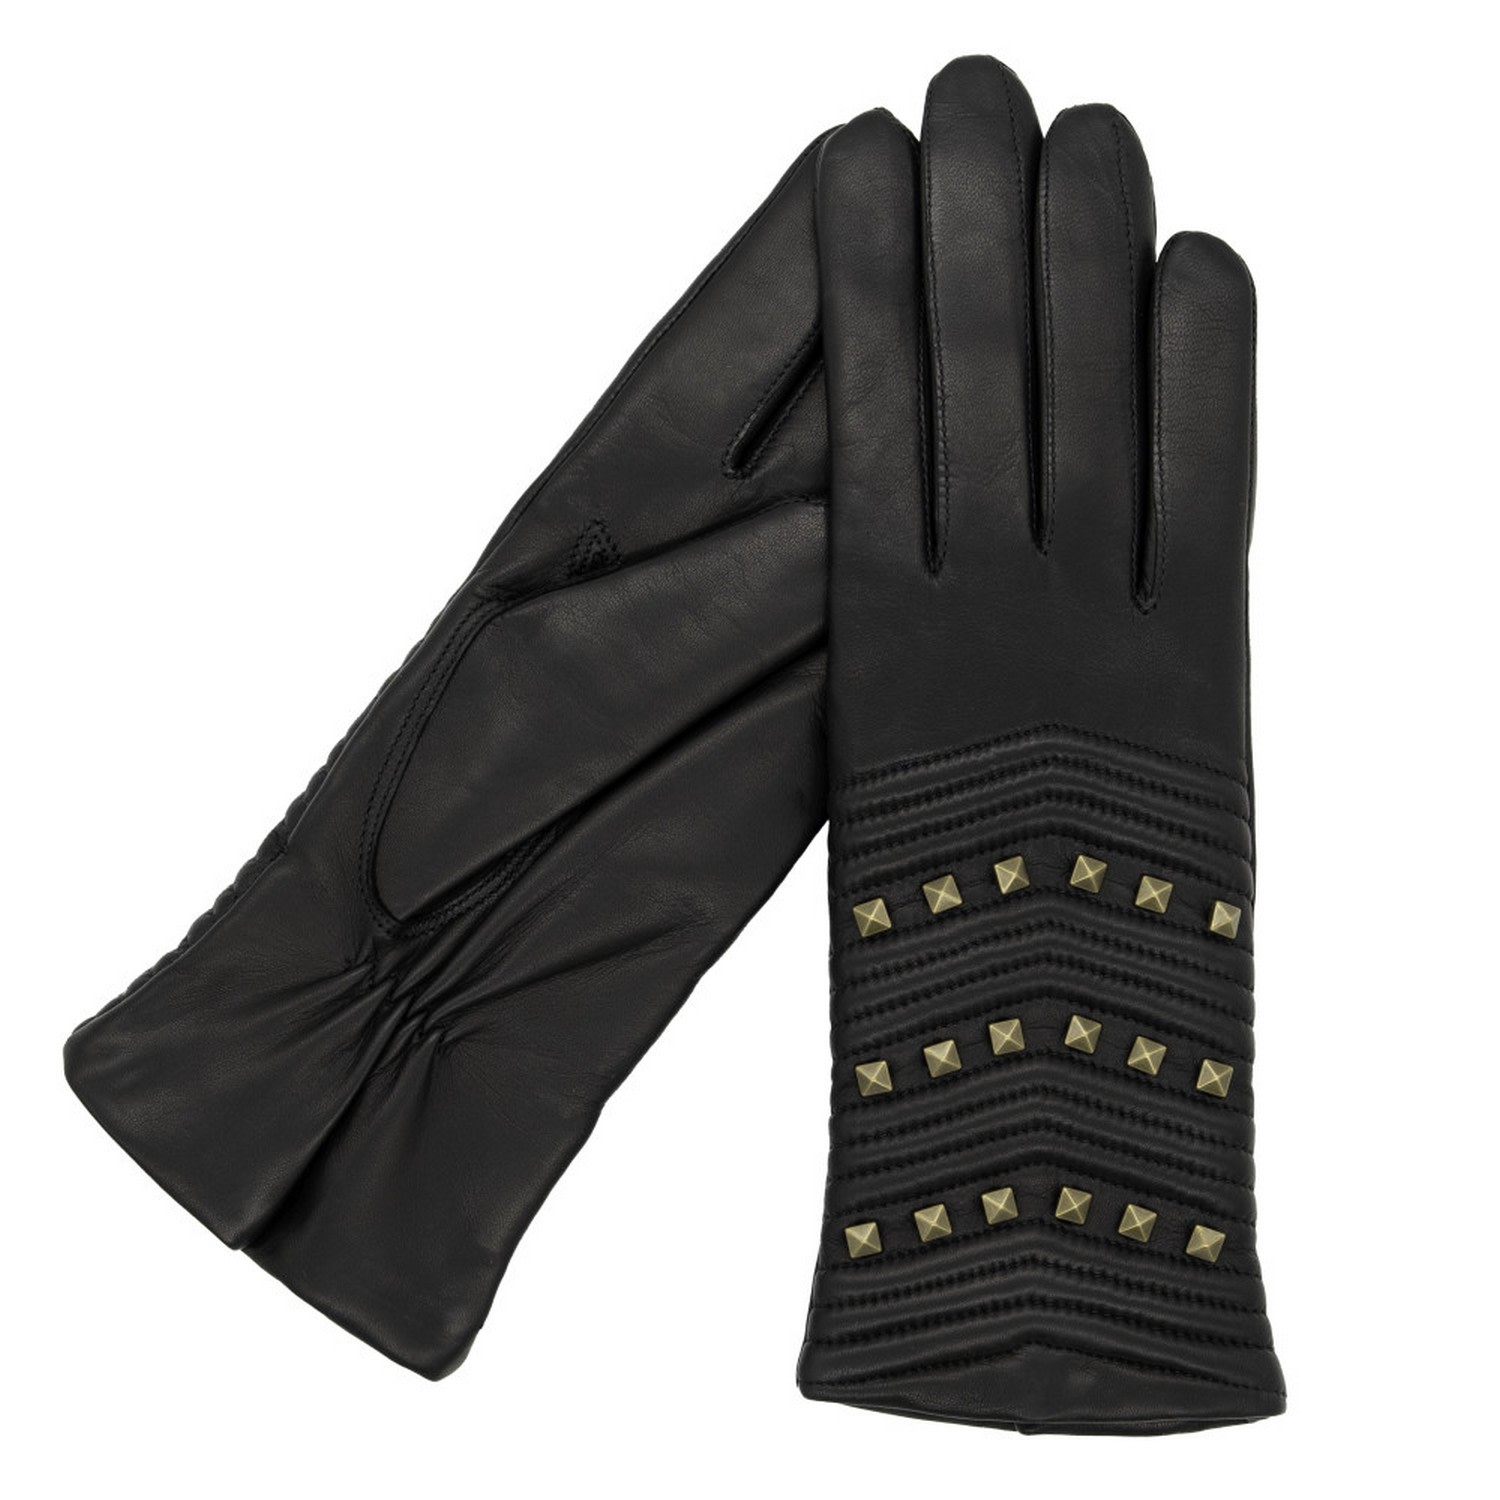 Zoe / Women Leather Gloves - Black 7.5" Karma Leather Gloves